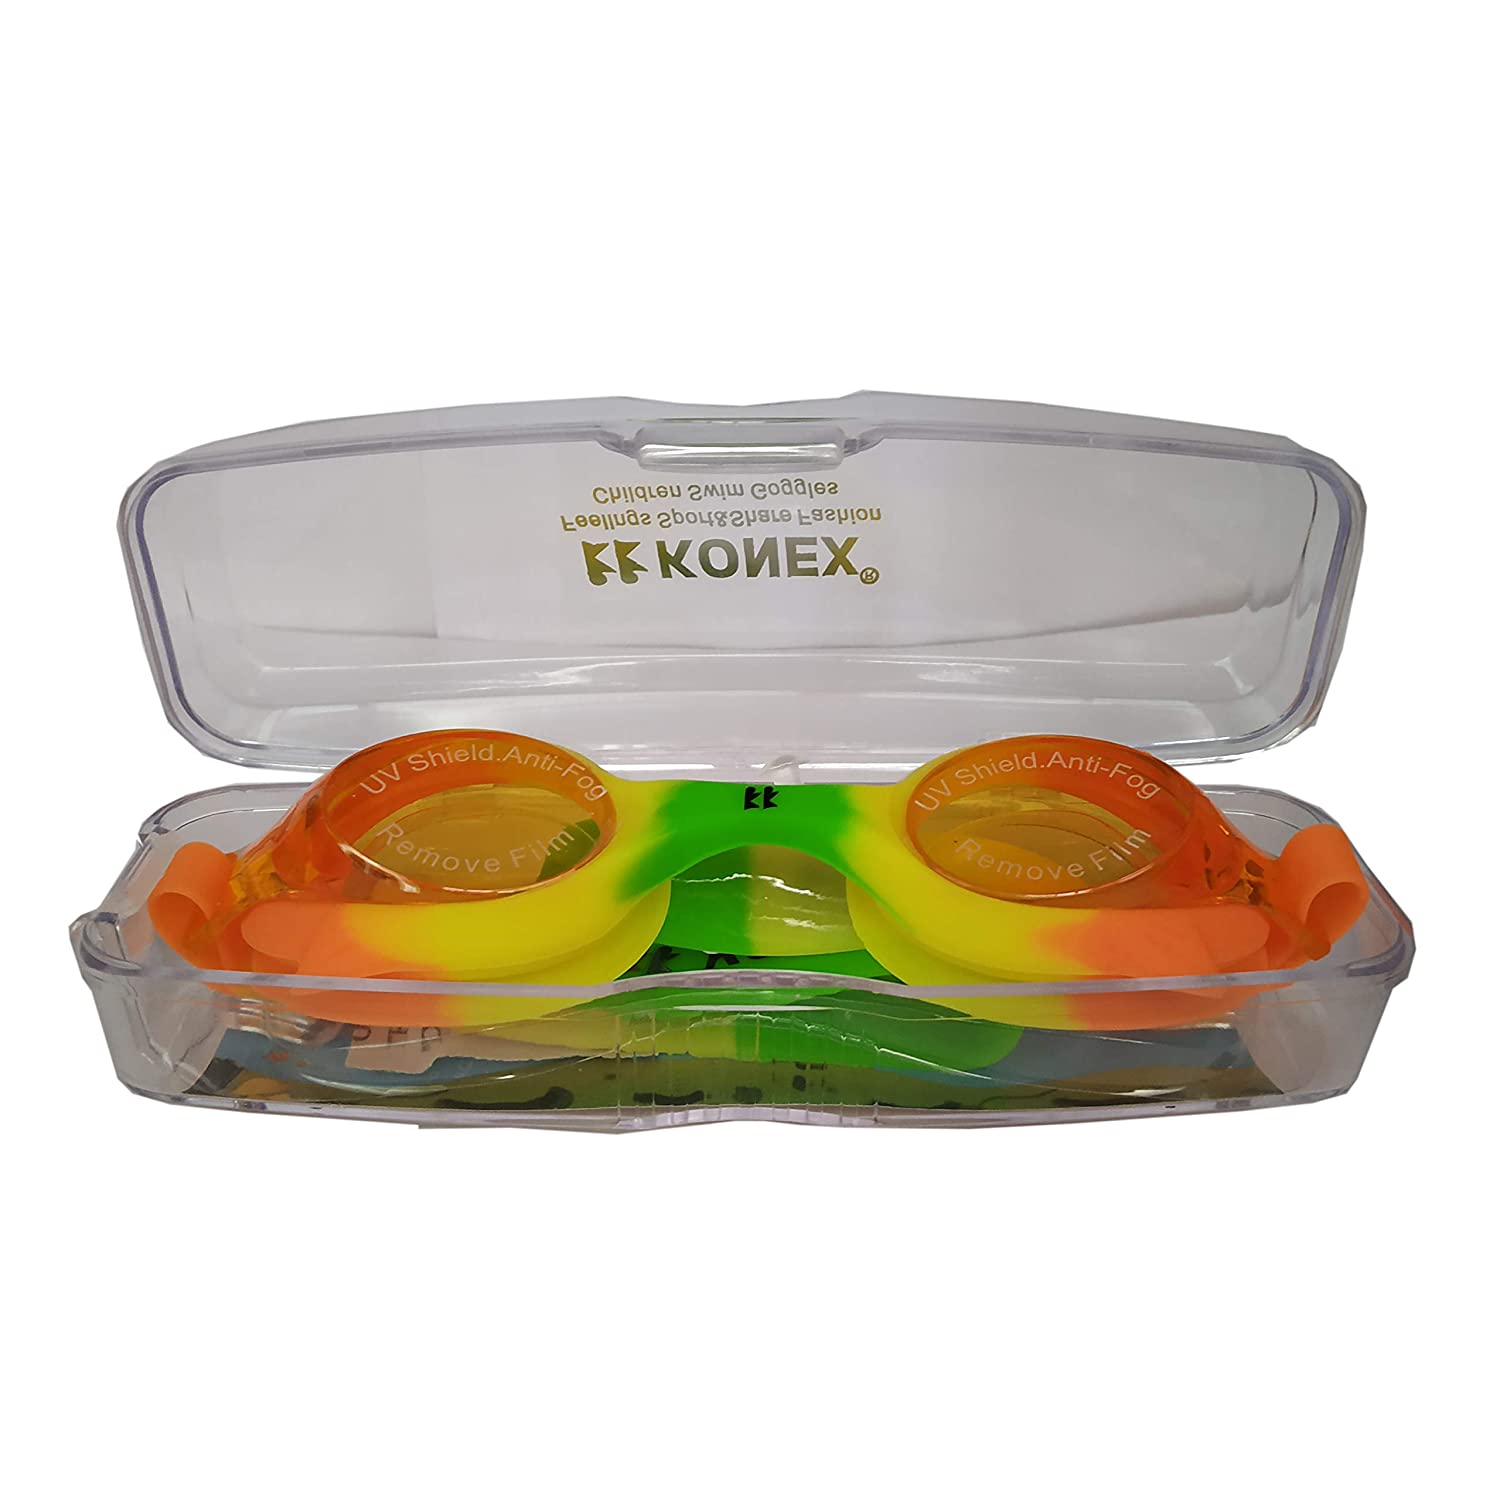 Konex CI-1150 Kids Swimming Goggle, Orange/Yellow/Green